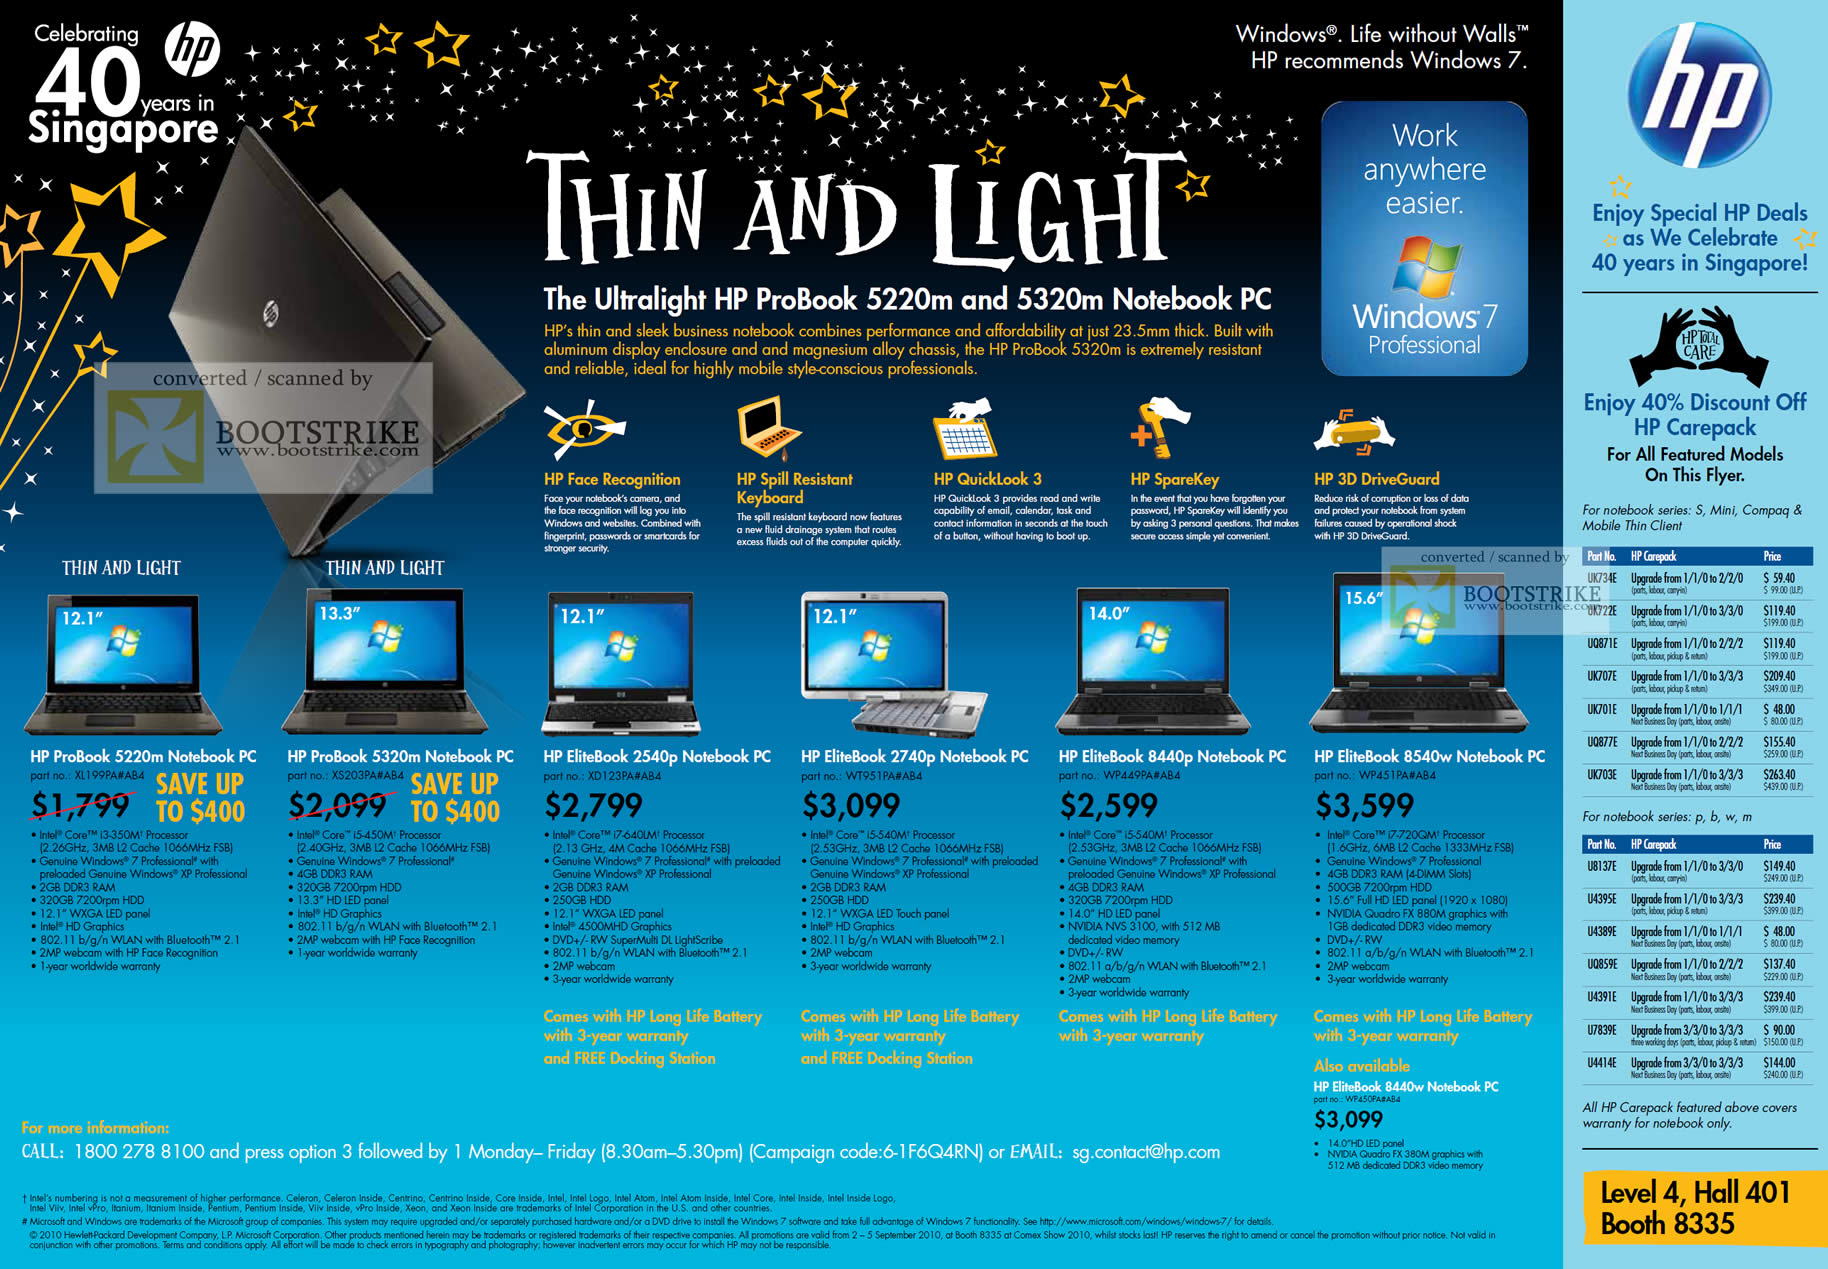 Comex 2010 price list image brochure of HP Notebooks ProBook 5220m 5320m 2540p EliteBook 2740p 8440p 8450w 8440w